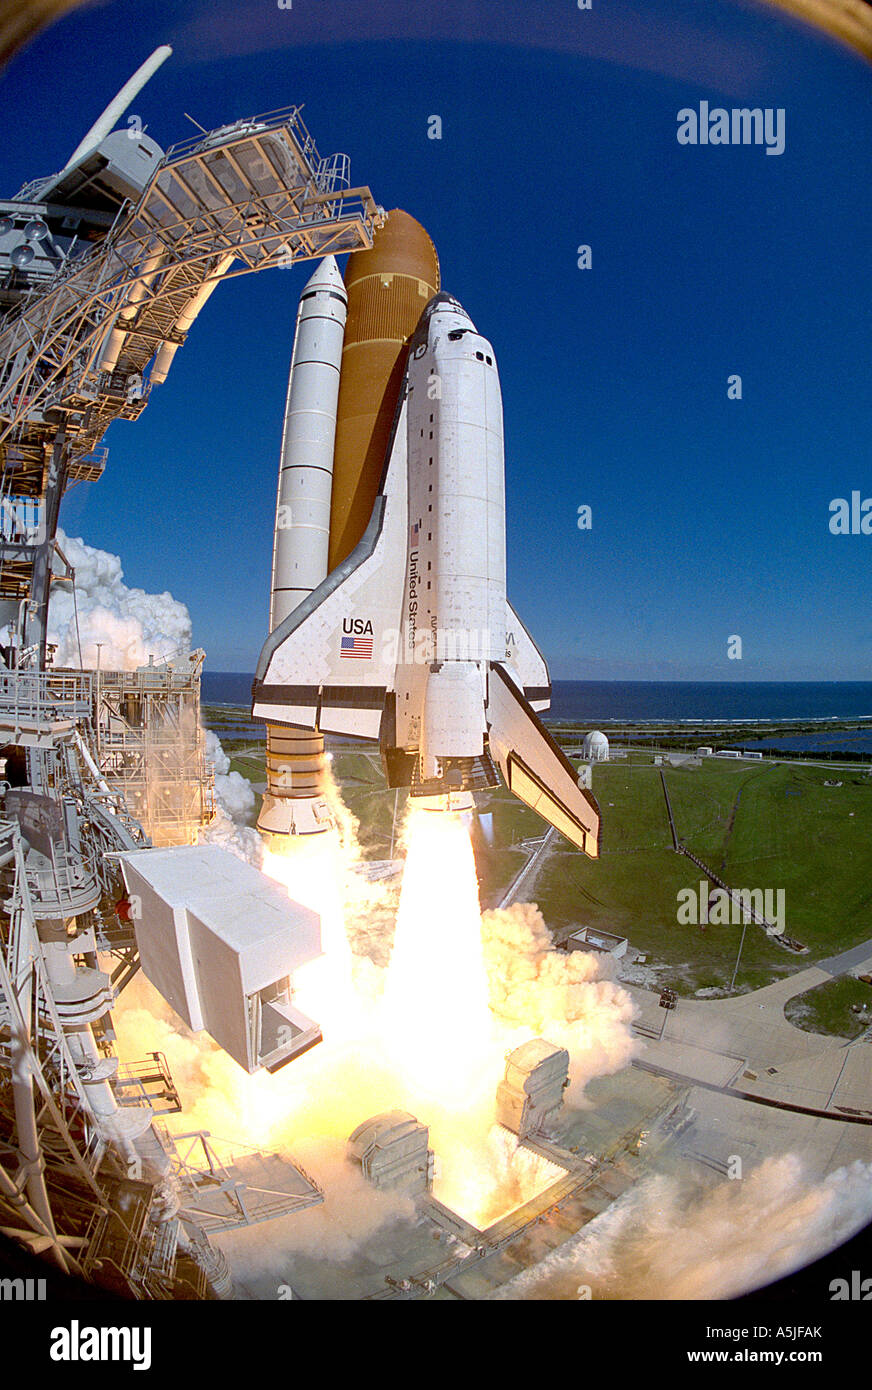 Atlantis STS-66 Launch. Stock Photo